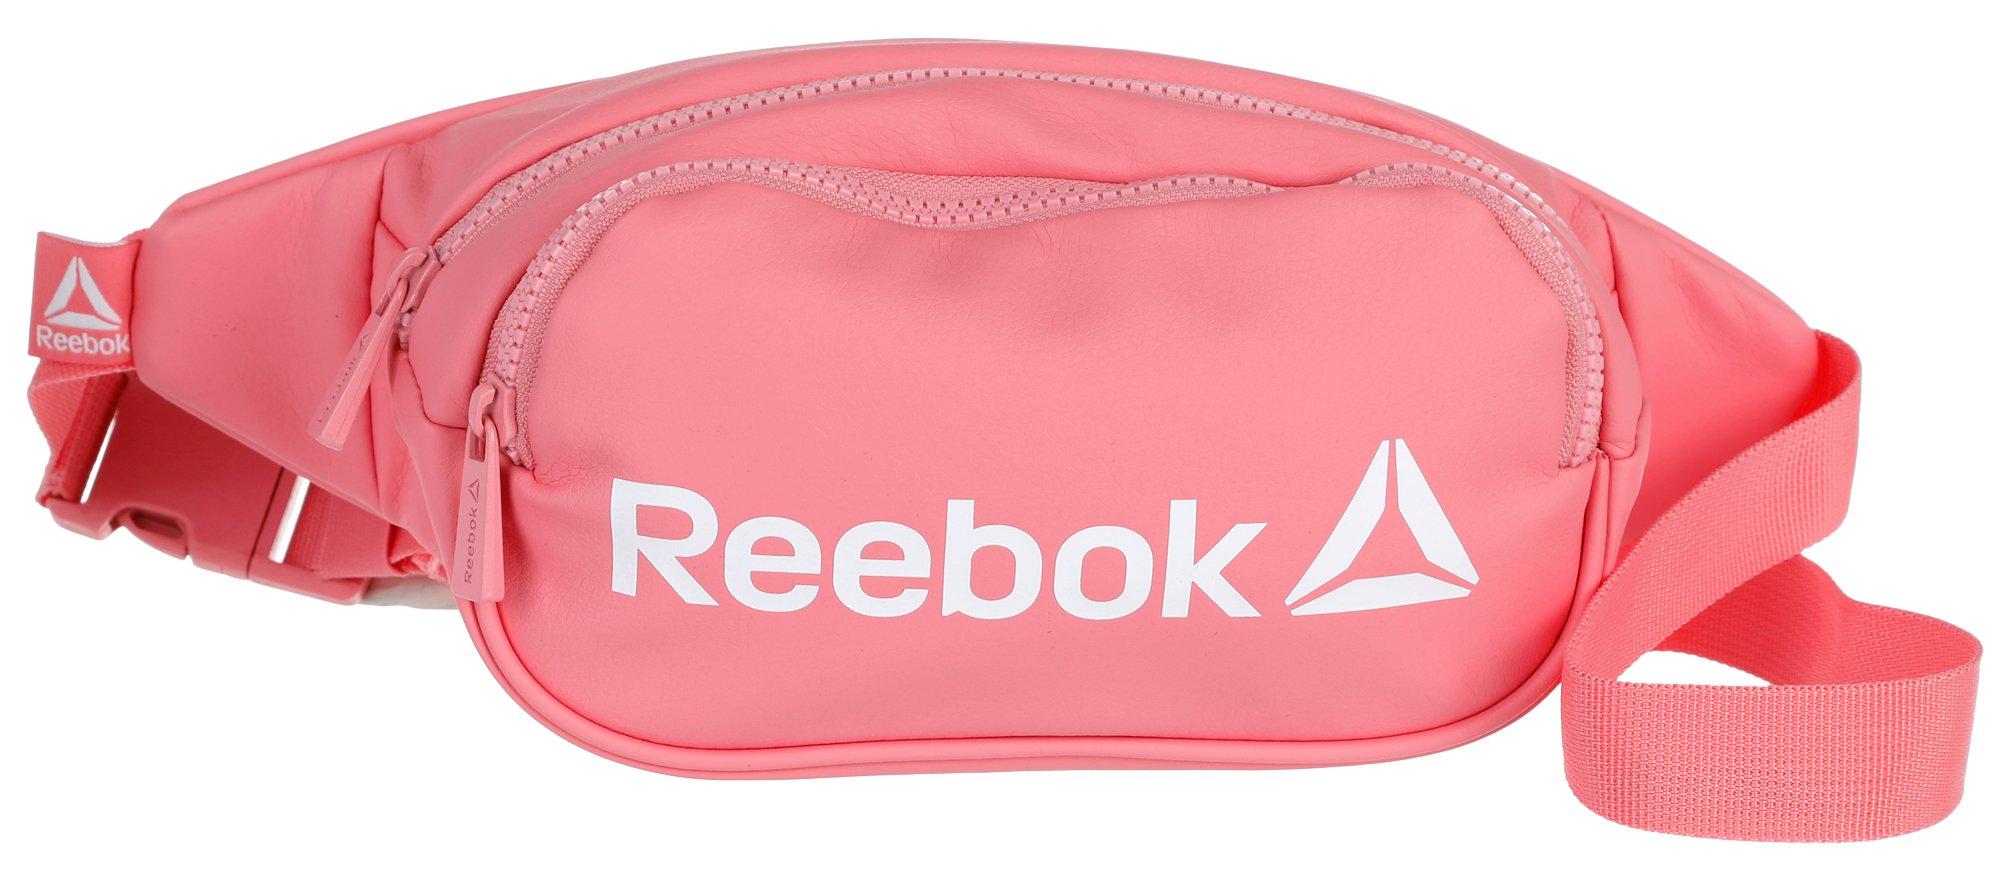 reebok fanny pack pink